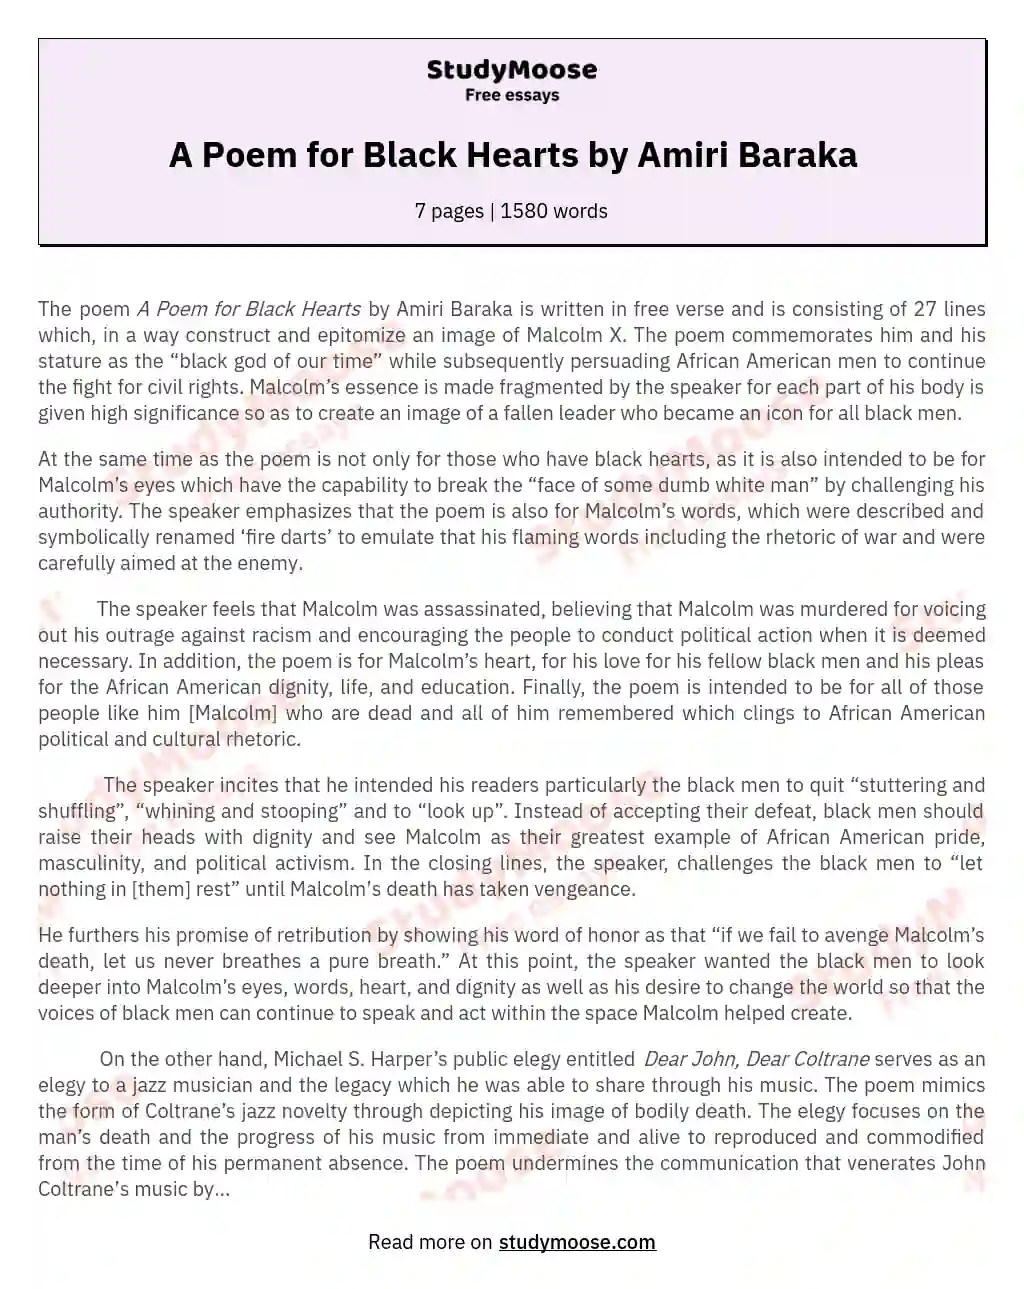 A Poem for Black Hearts by Amiri Baraka essay